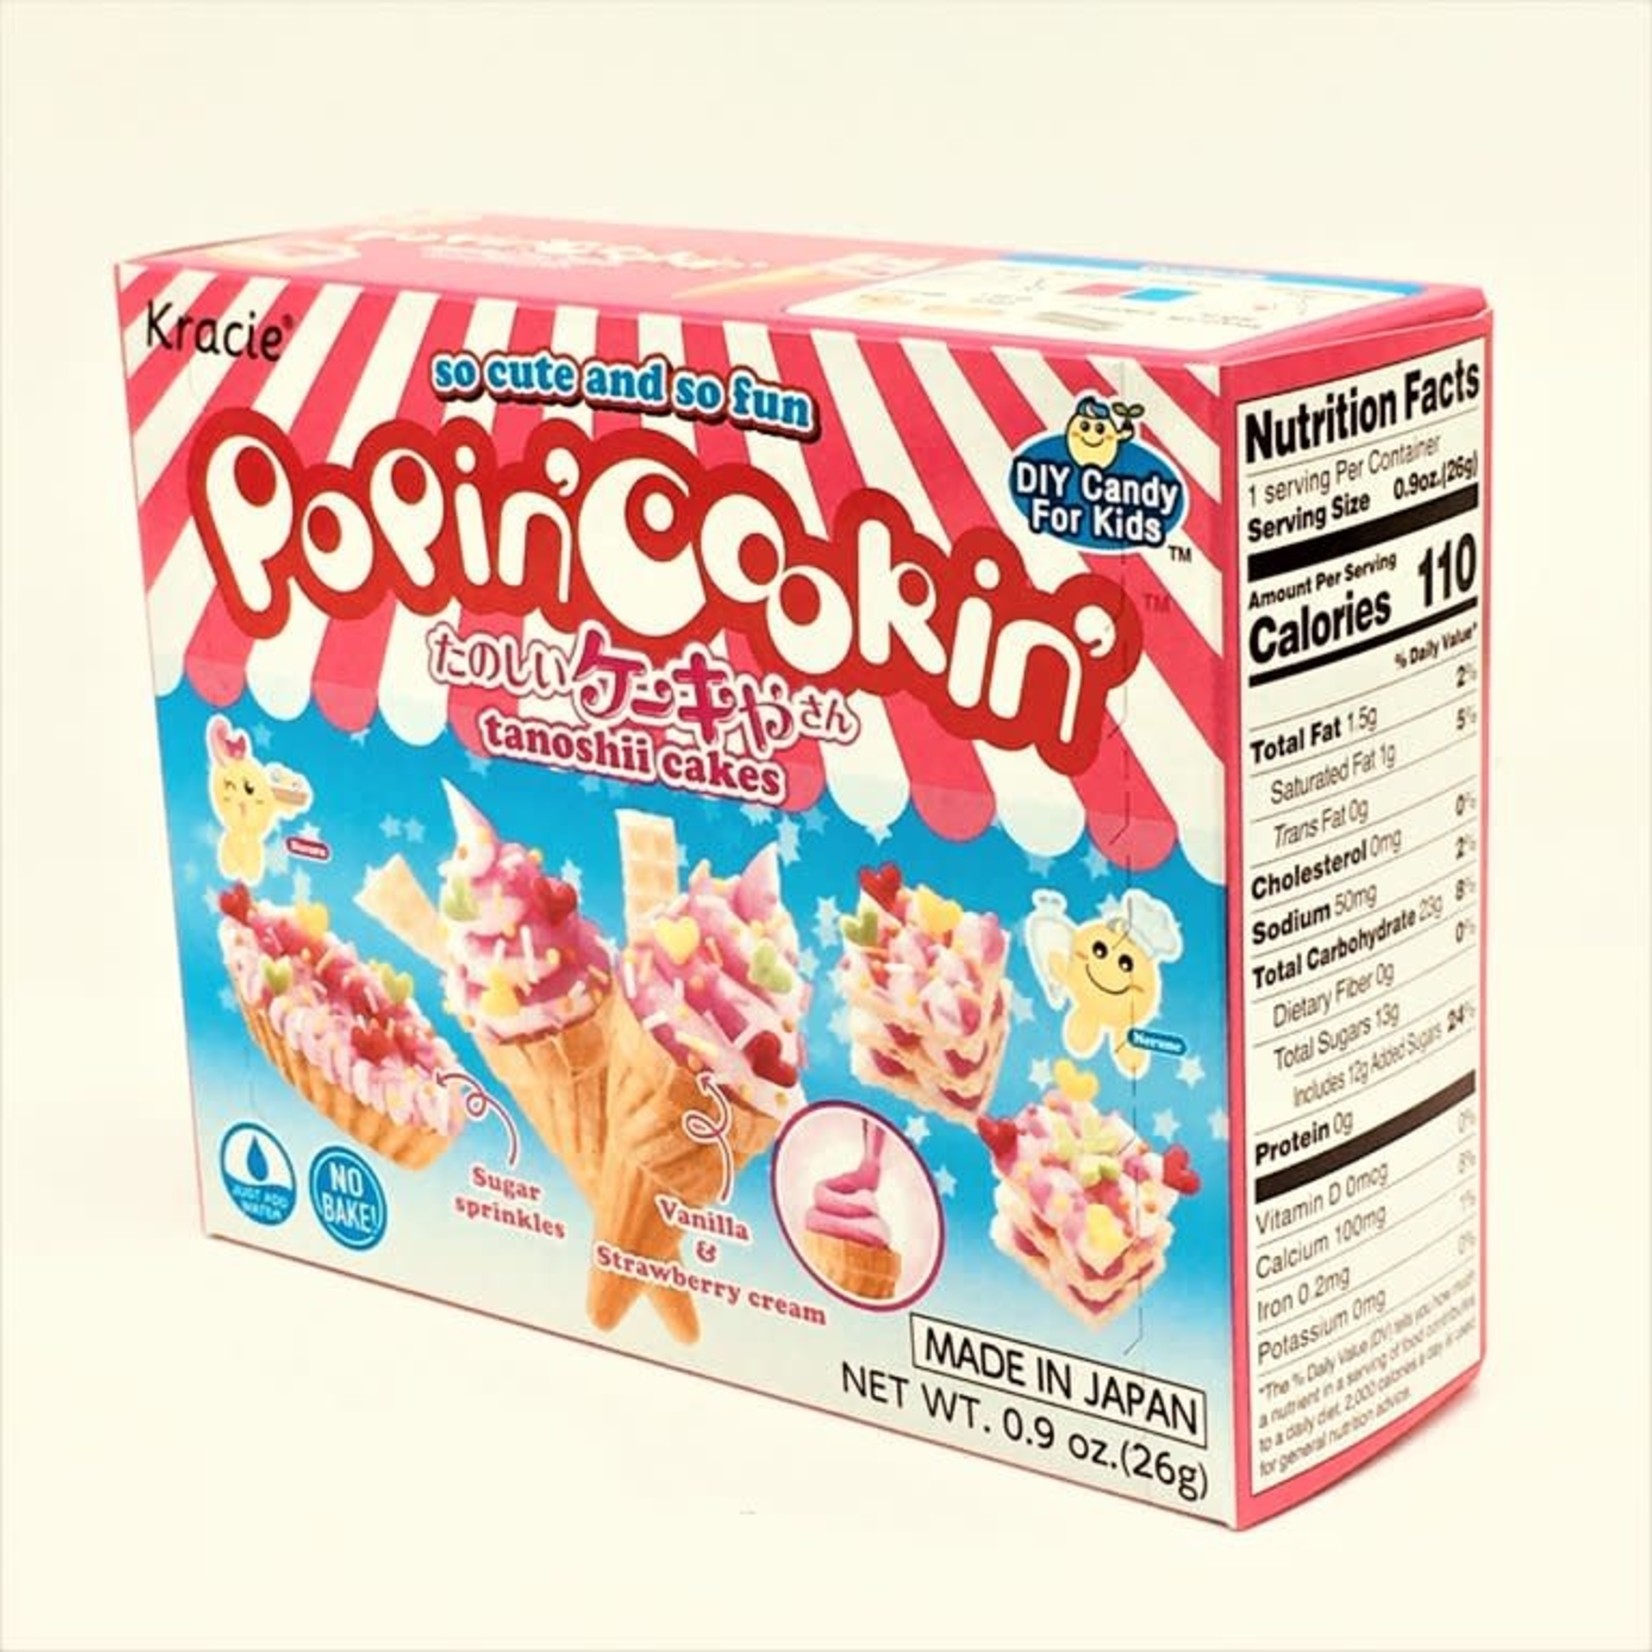 https://cdn.shoplightspeed.com/shops/649365/files/39379213/1652x1652x2/kracie-kracie-popin-cookin-tanoshii-cakes-kit.jpg